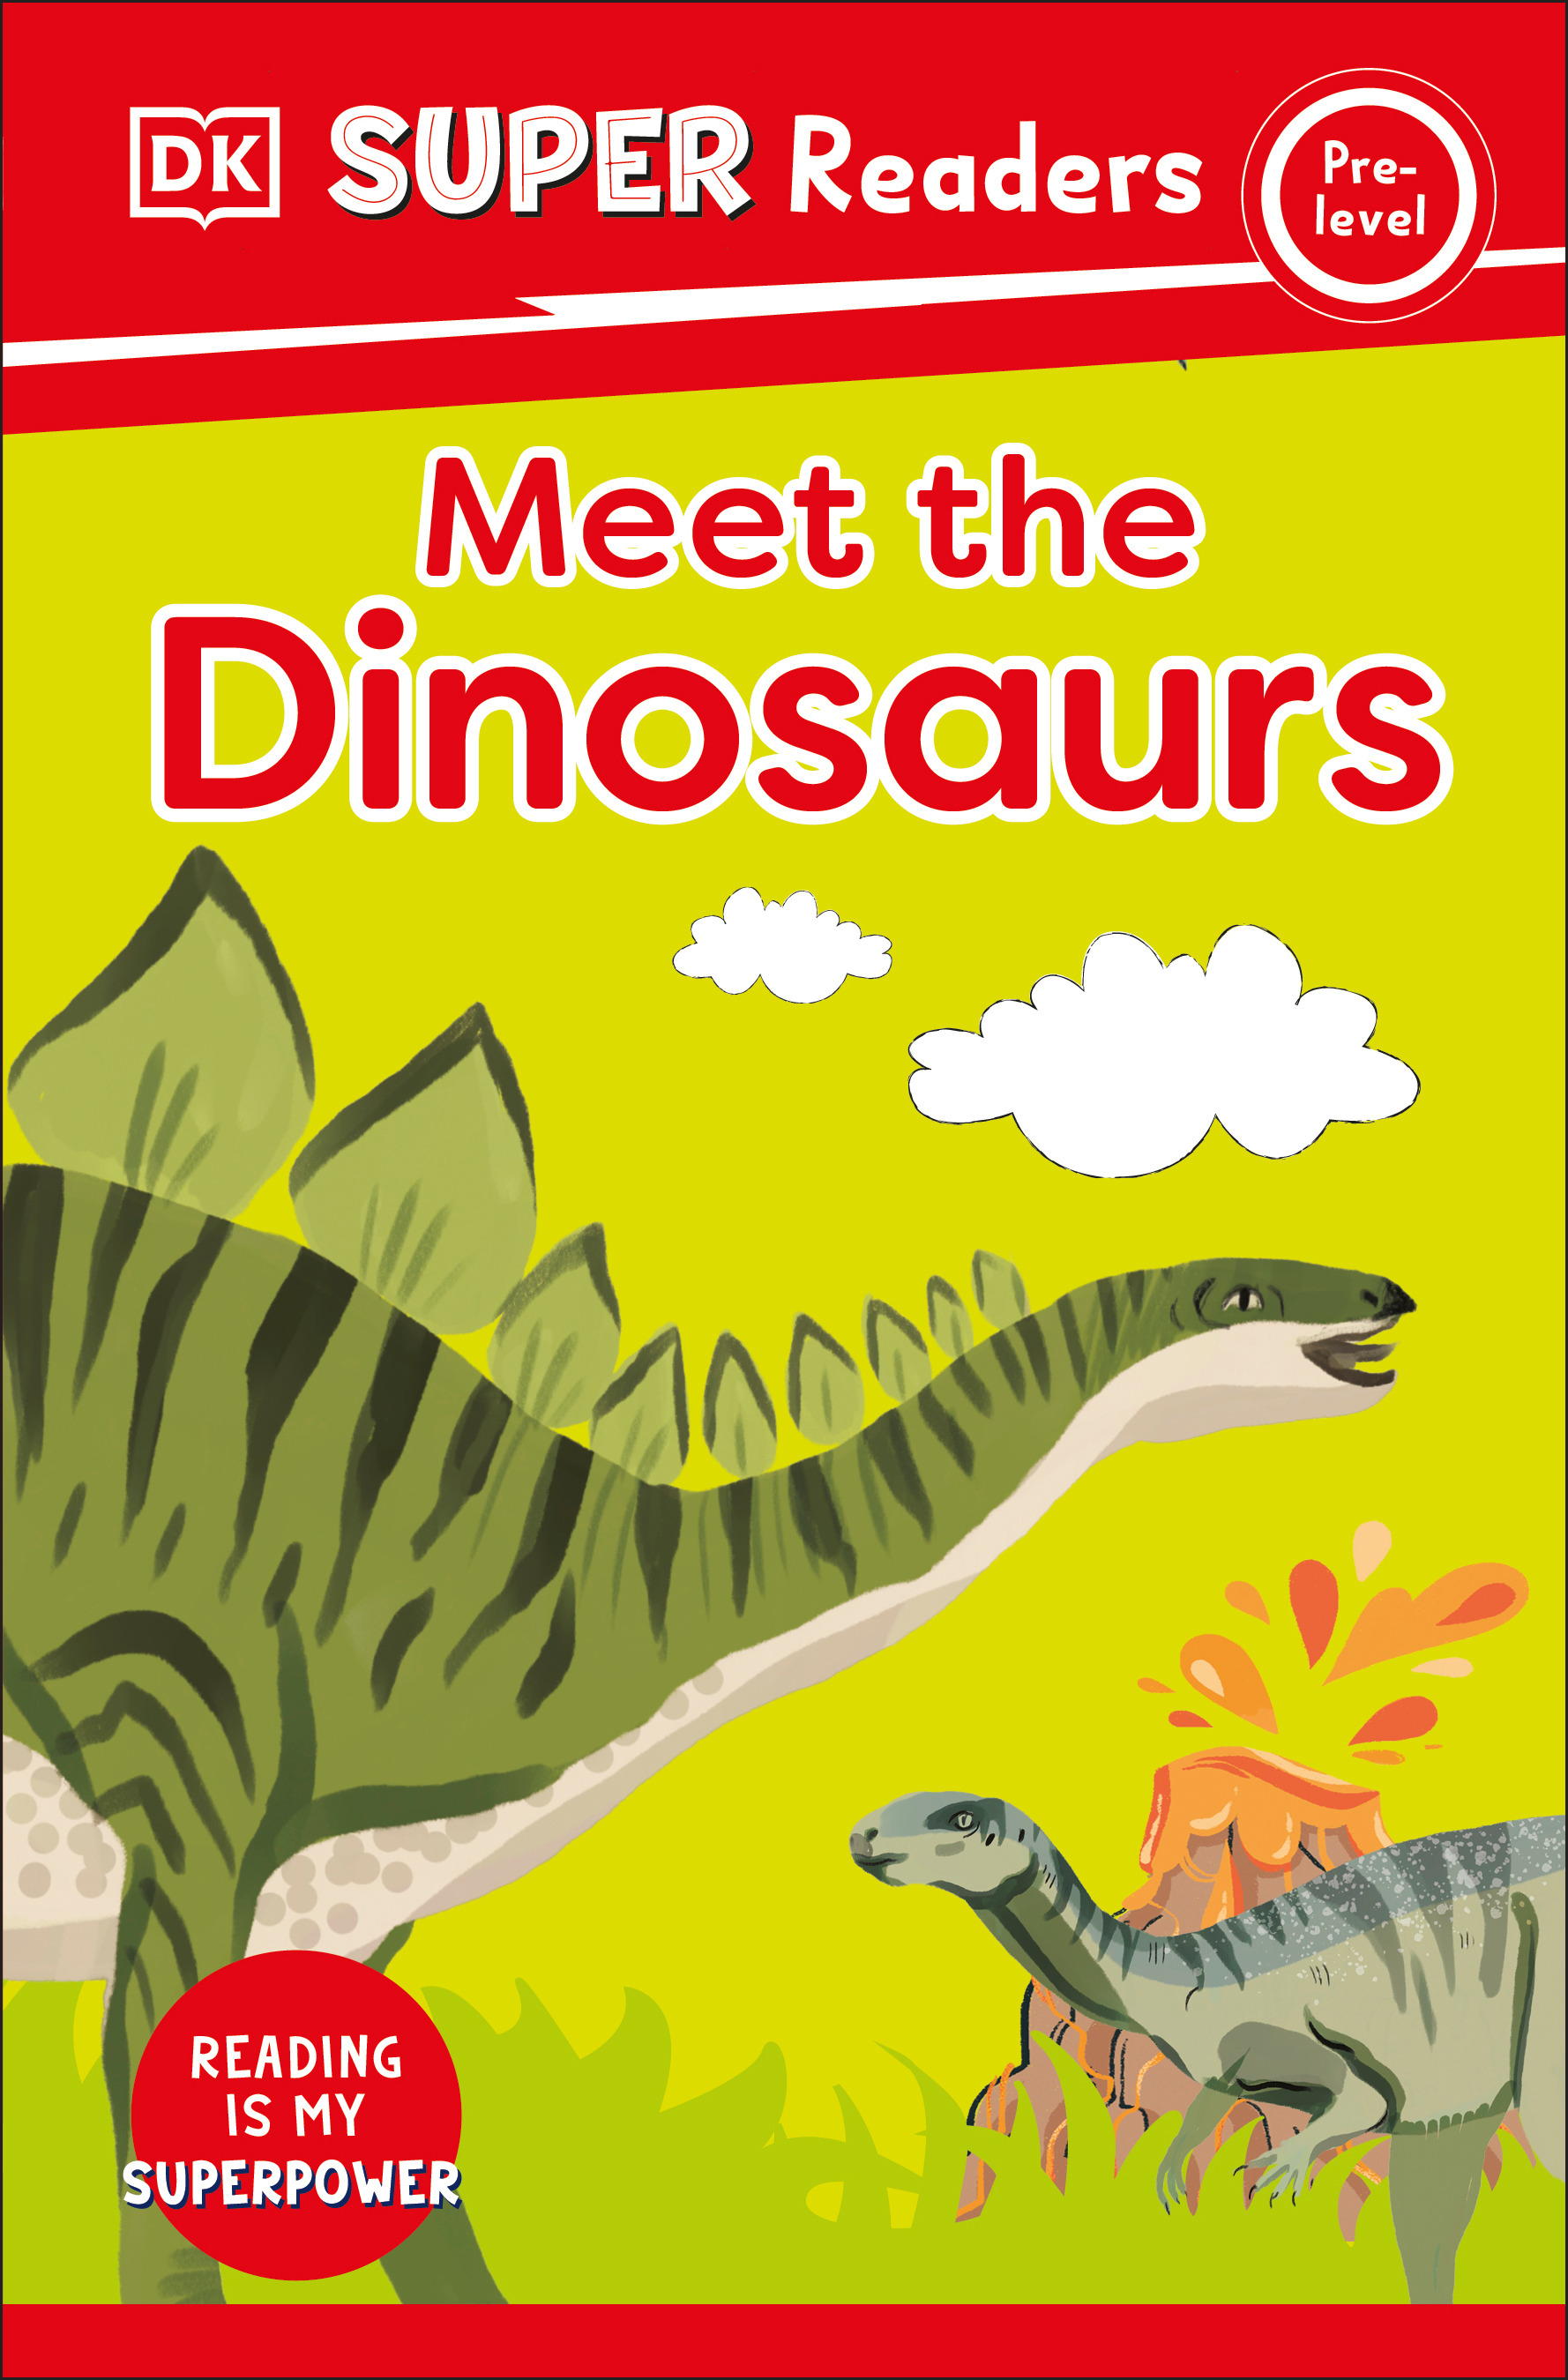 DK Super Readers Pre-Level - Meet the Dinosaurs | 